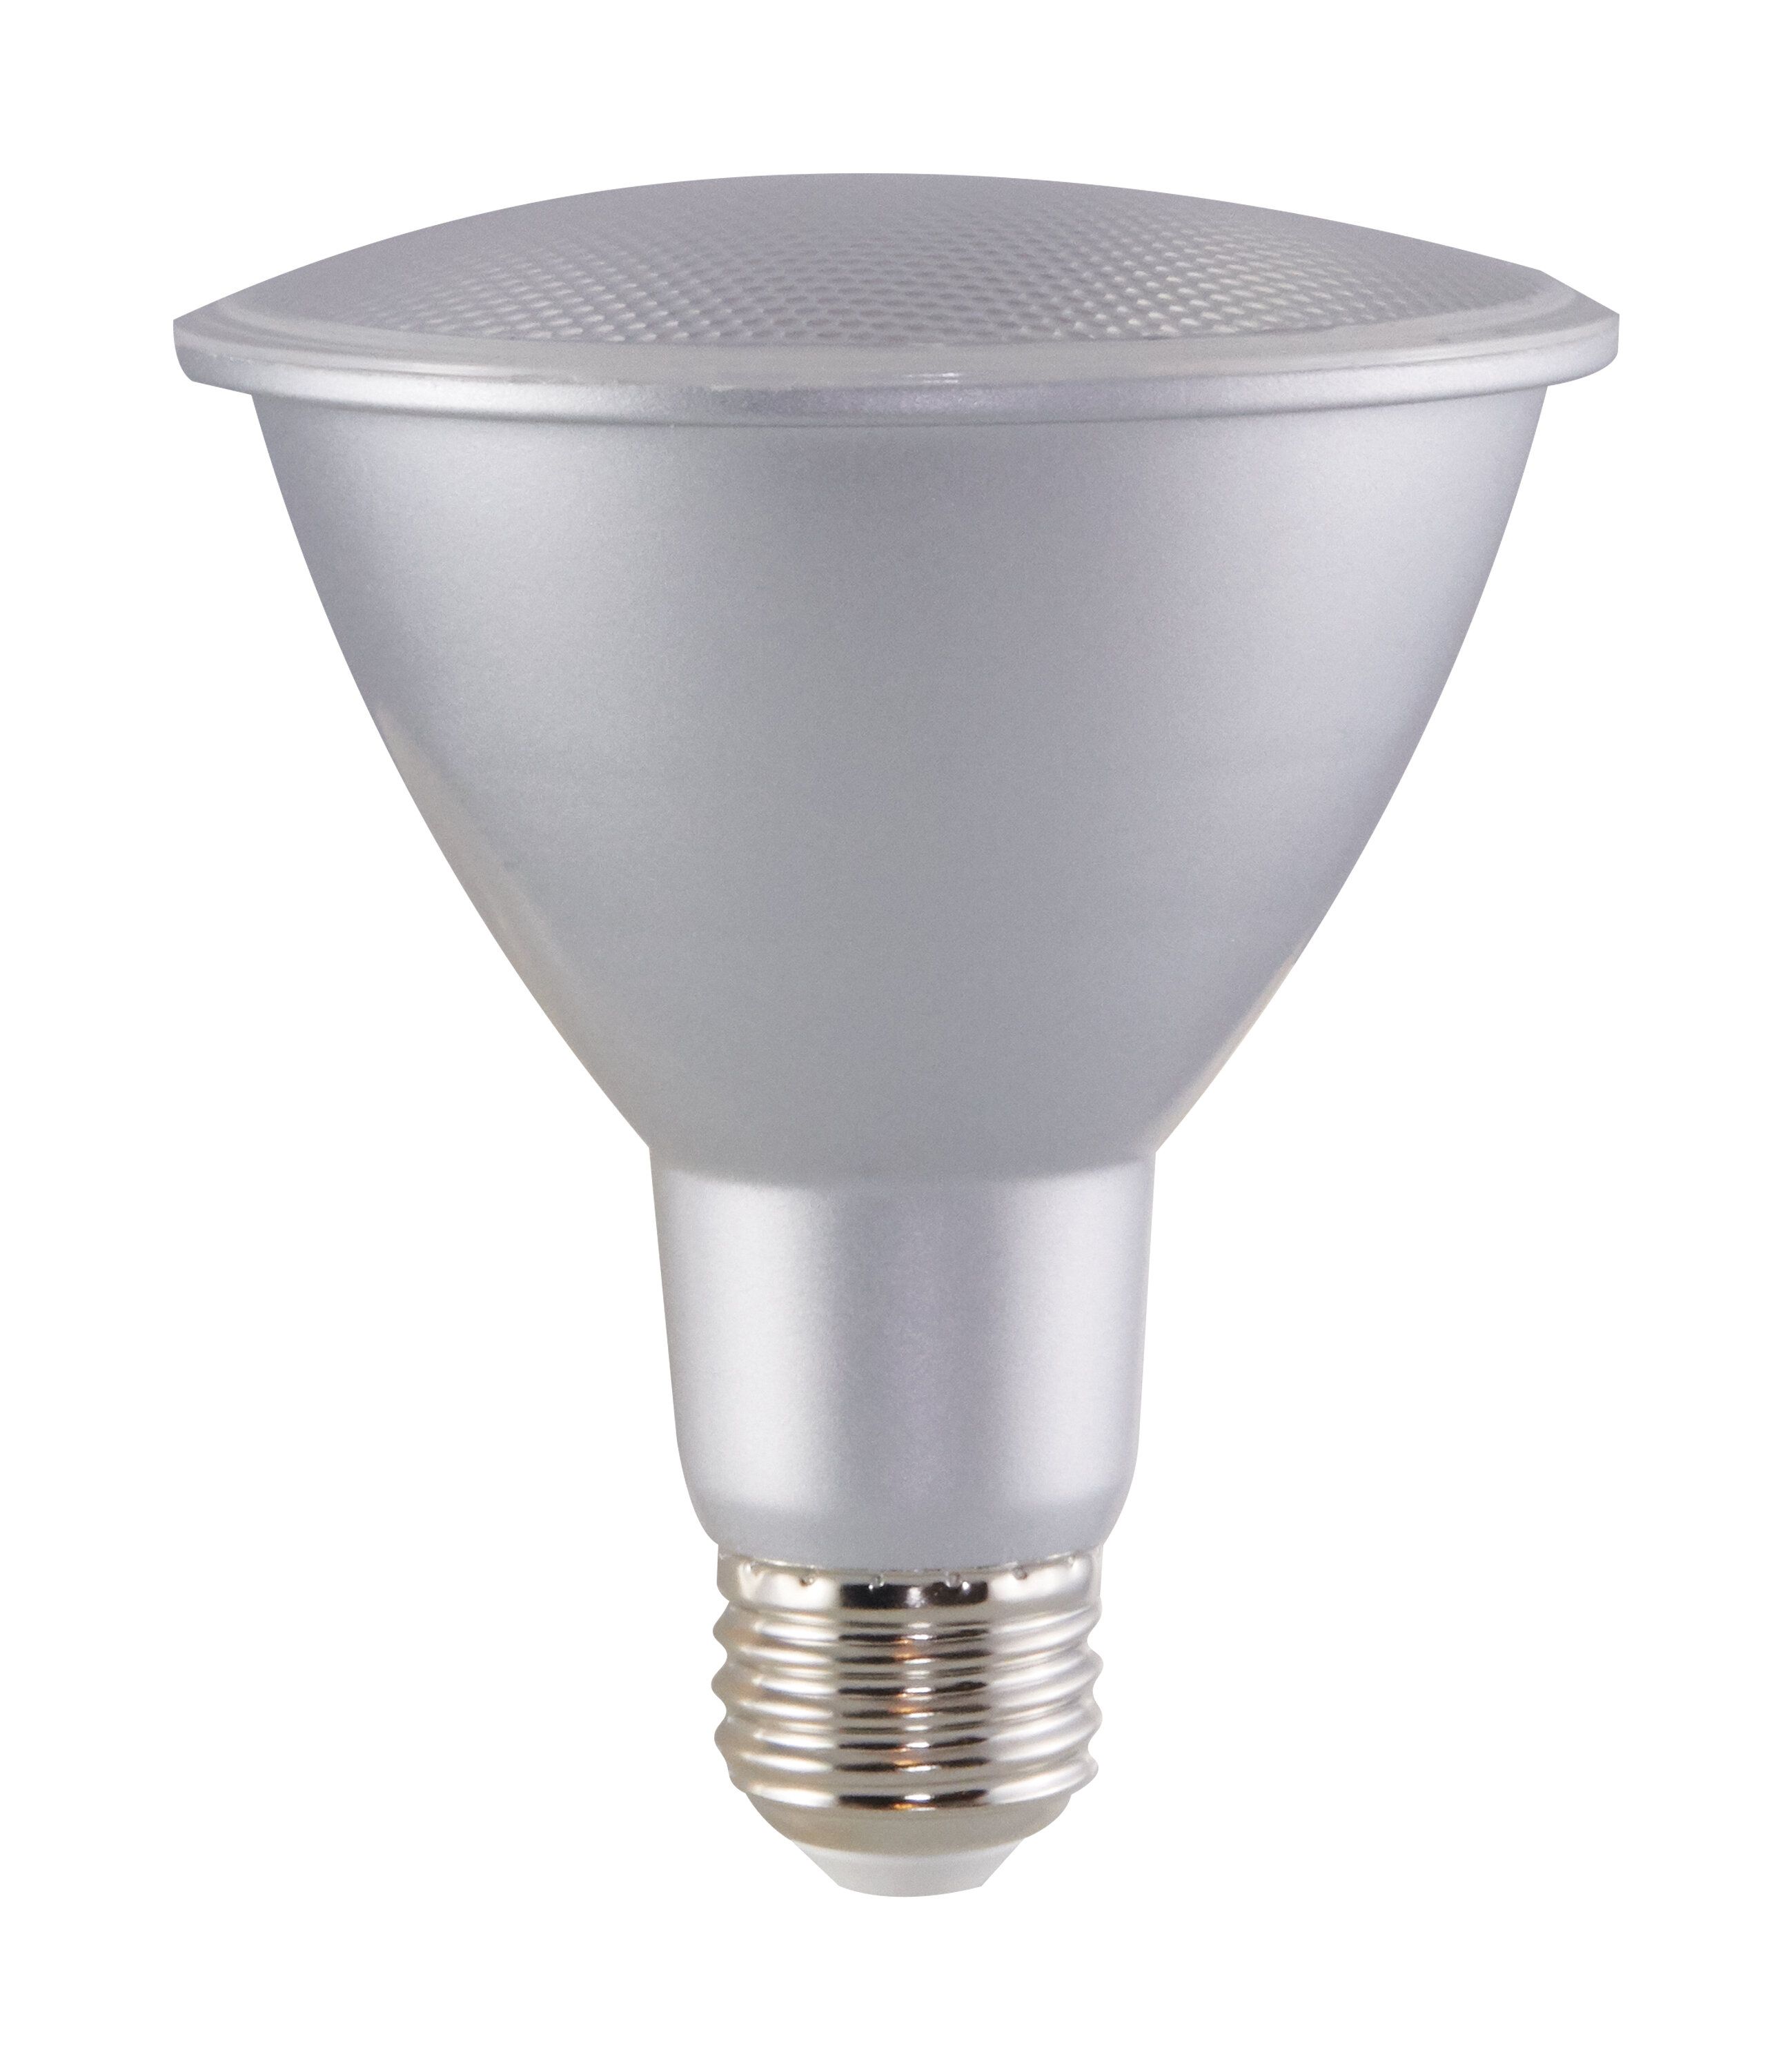 Light Bulb Bulbs E27 LED Bulb 20W Warm White/Daylight Dimmable 1900 lumens 